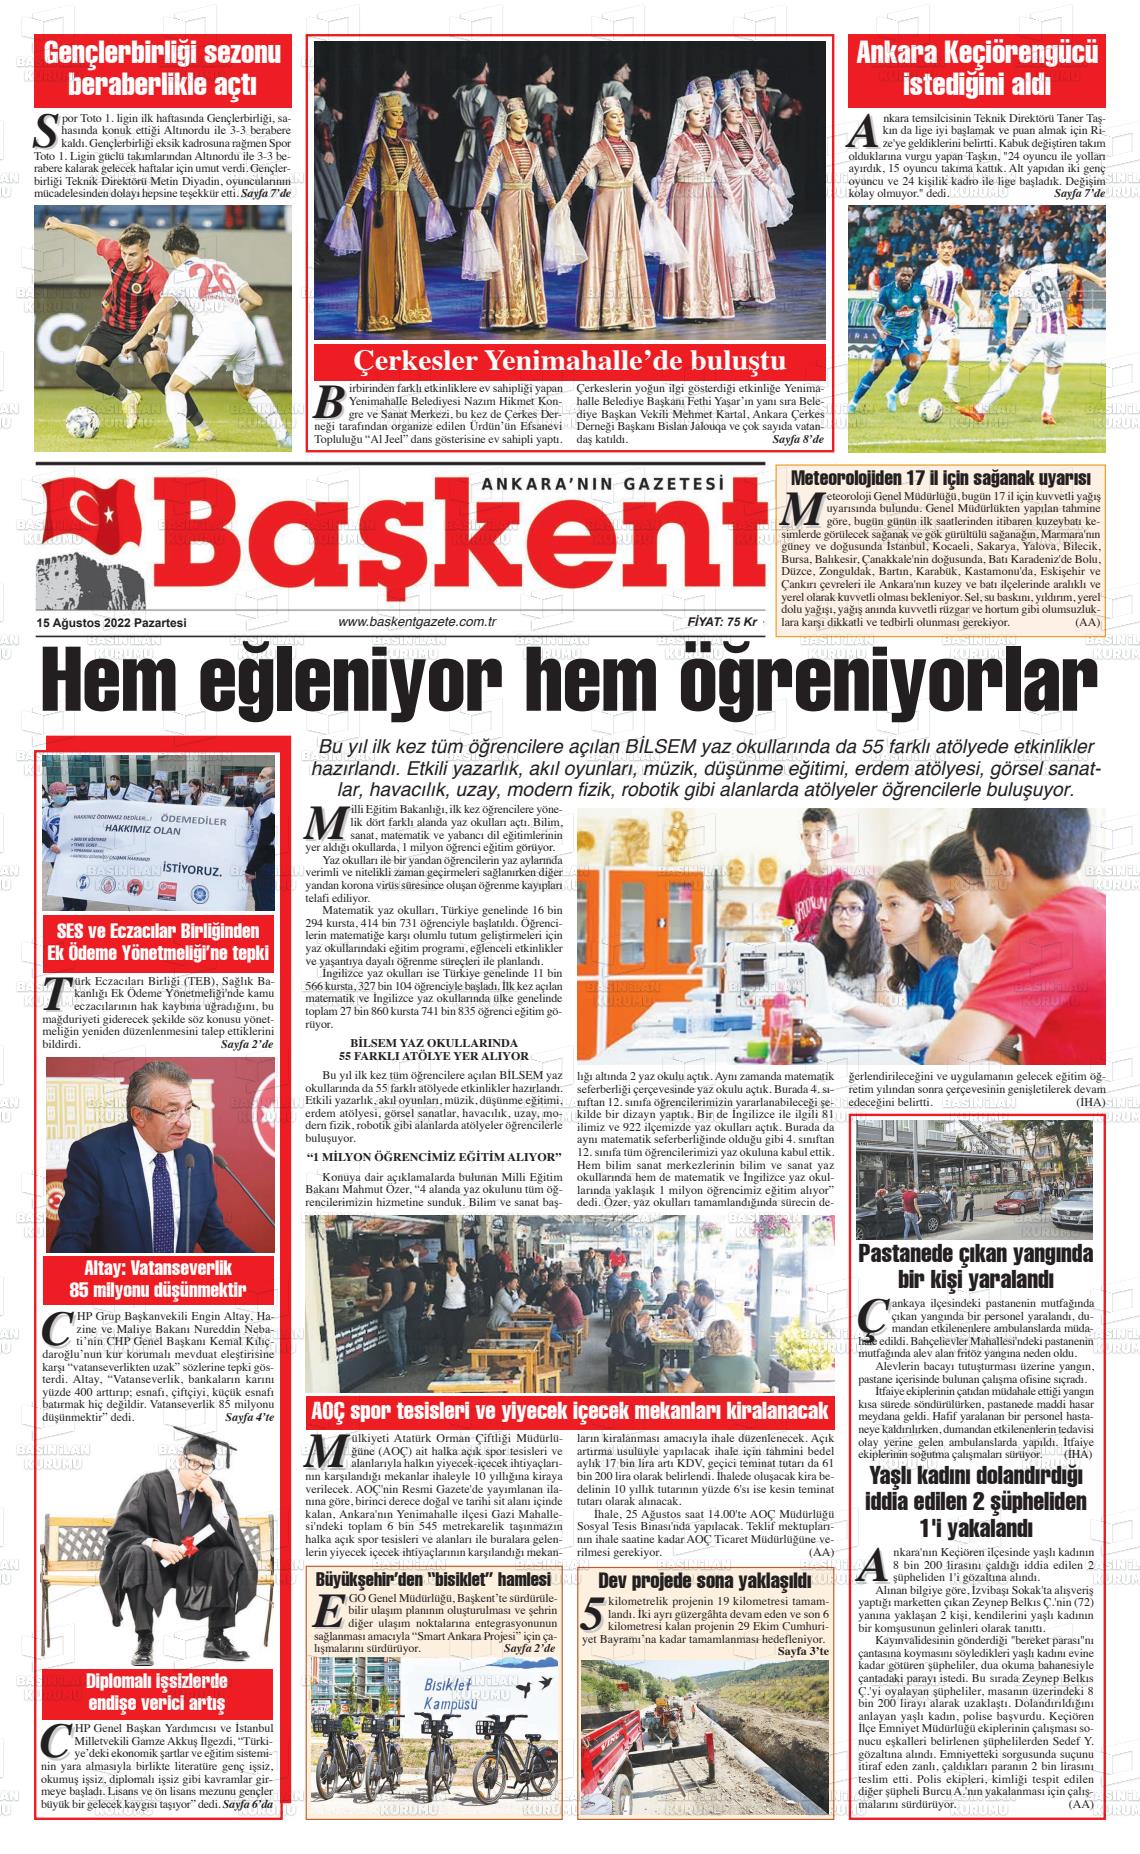 15 Ağustos 2022 Ankara Başkent Gazete Manşeti